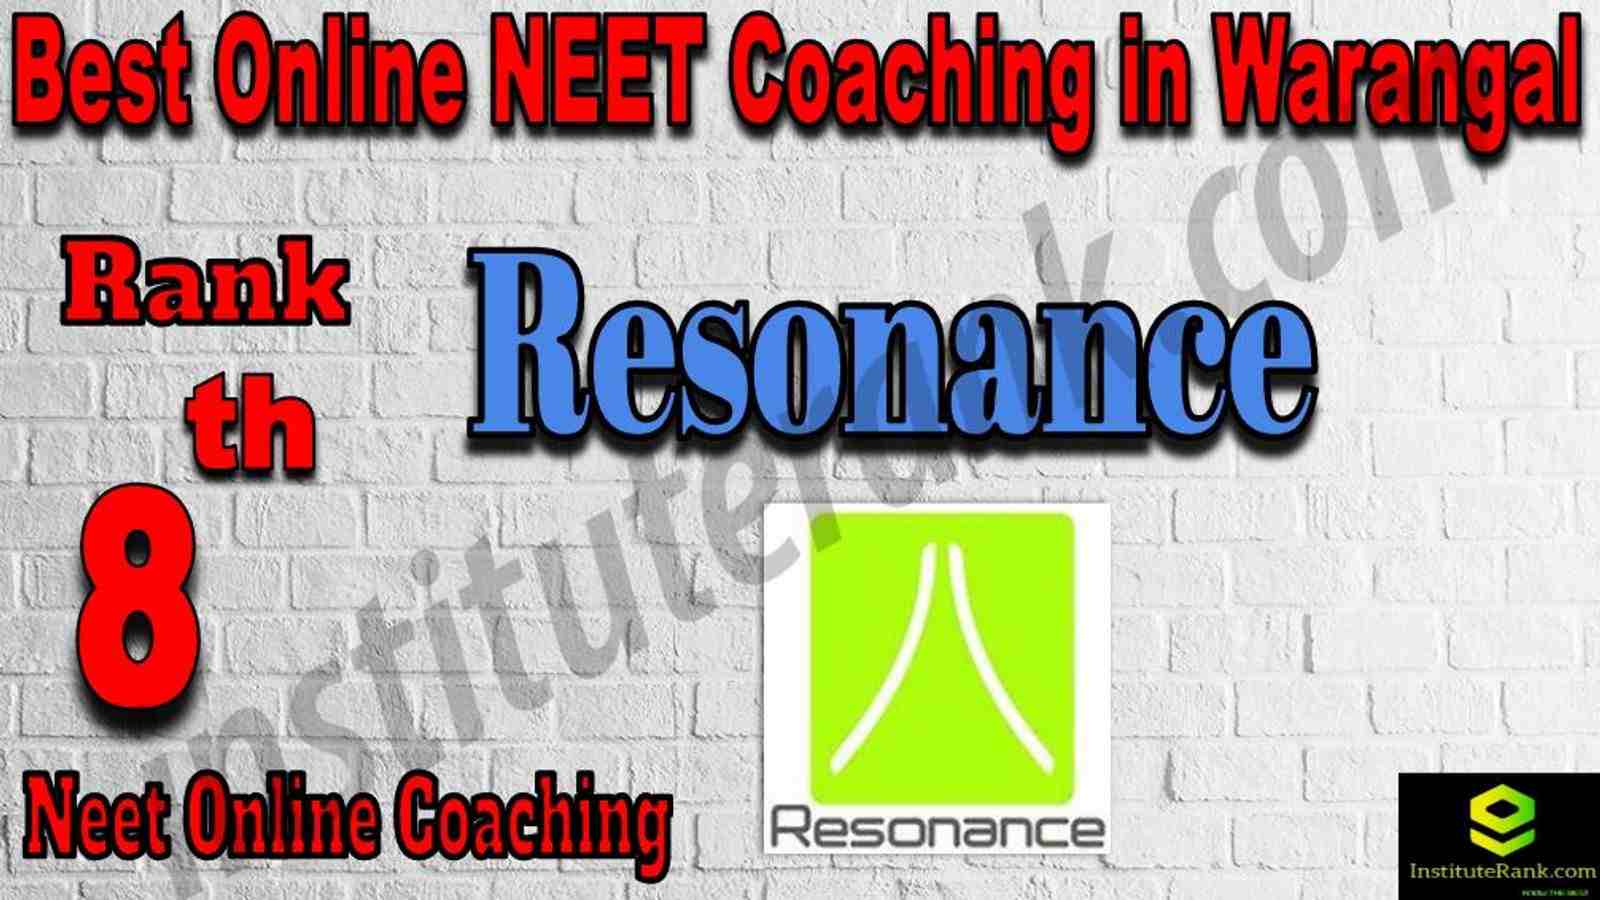 8th Best Online Neet Coaching in Warangal